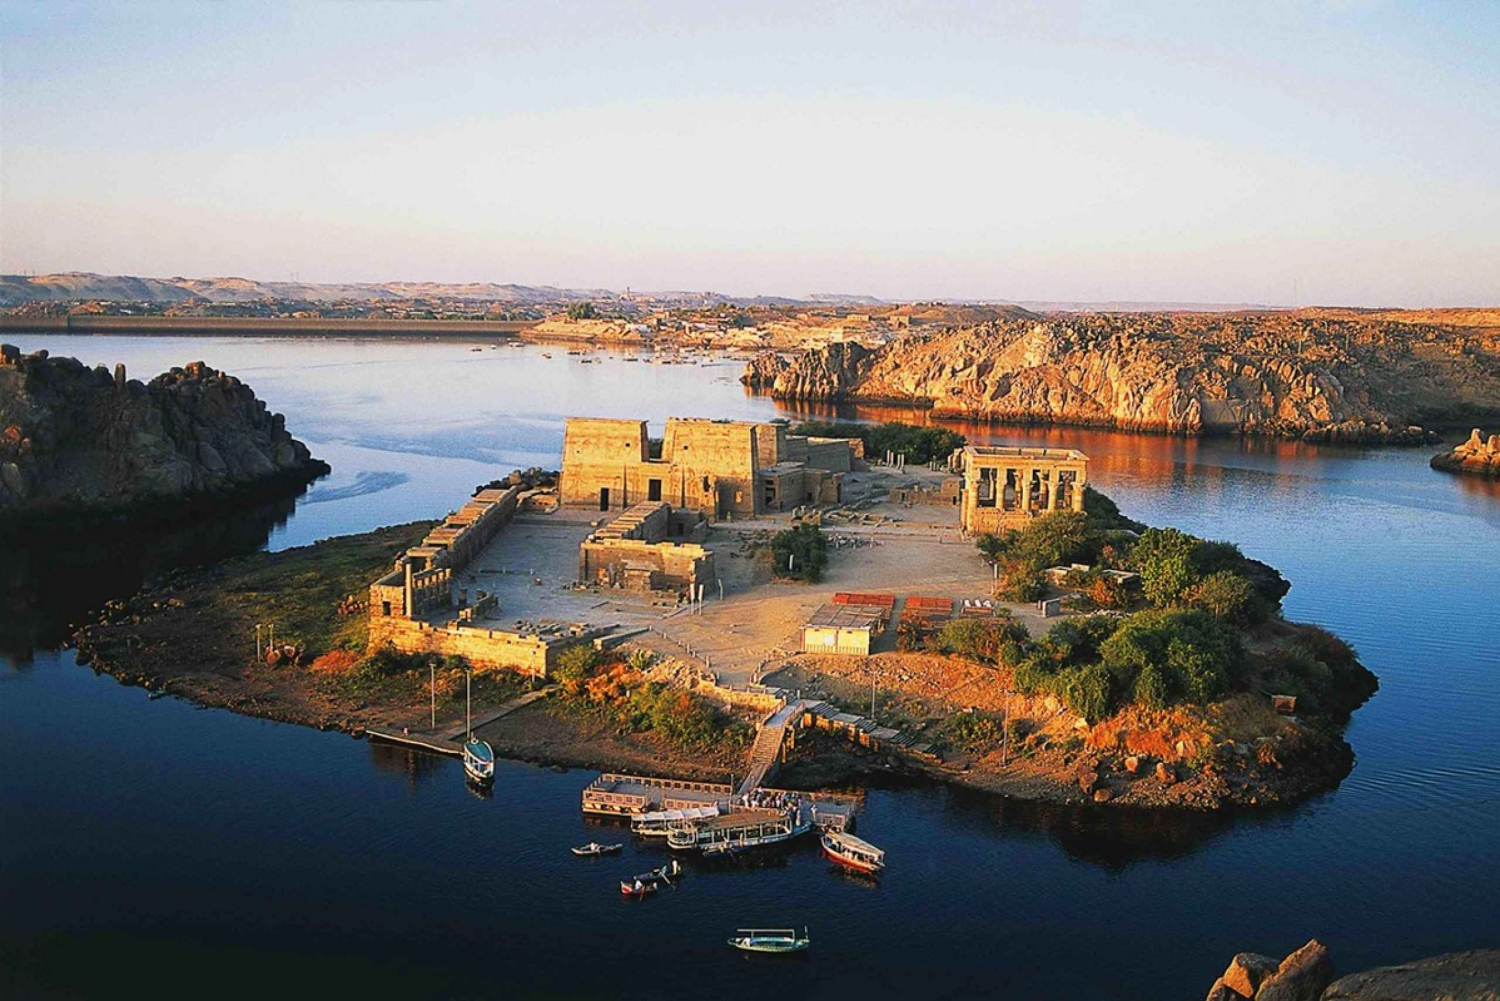 8 dages ture til pyramiderne, Luxor og Aswan